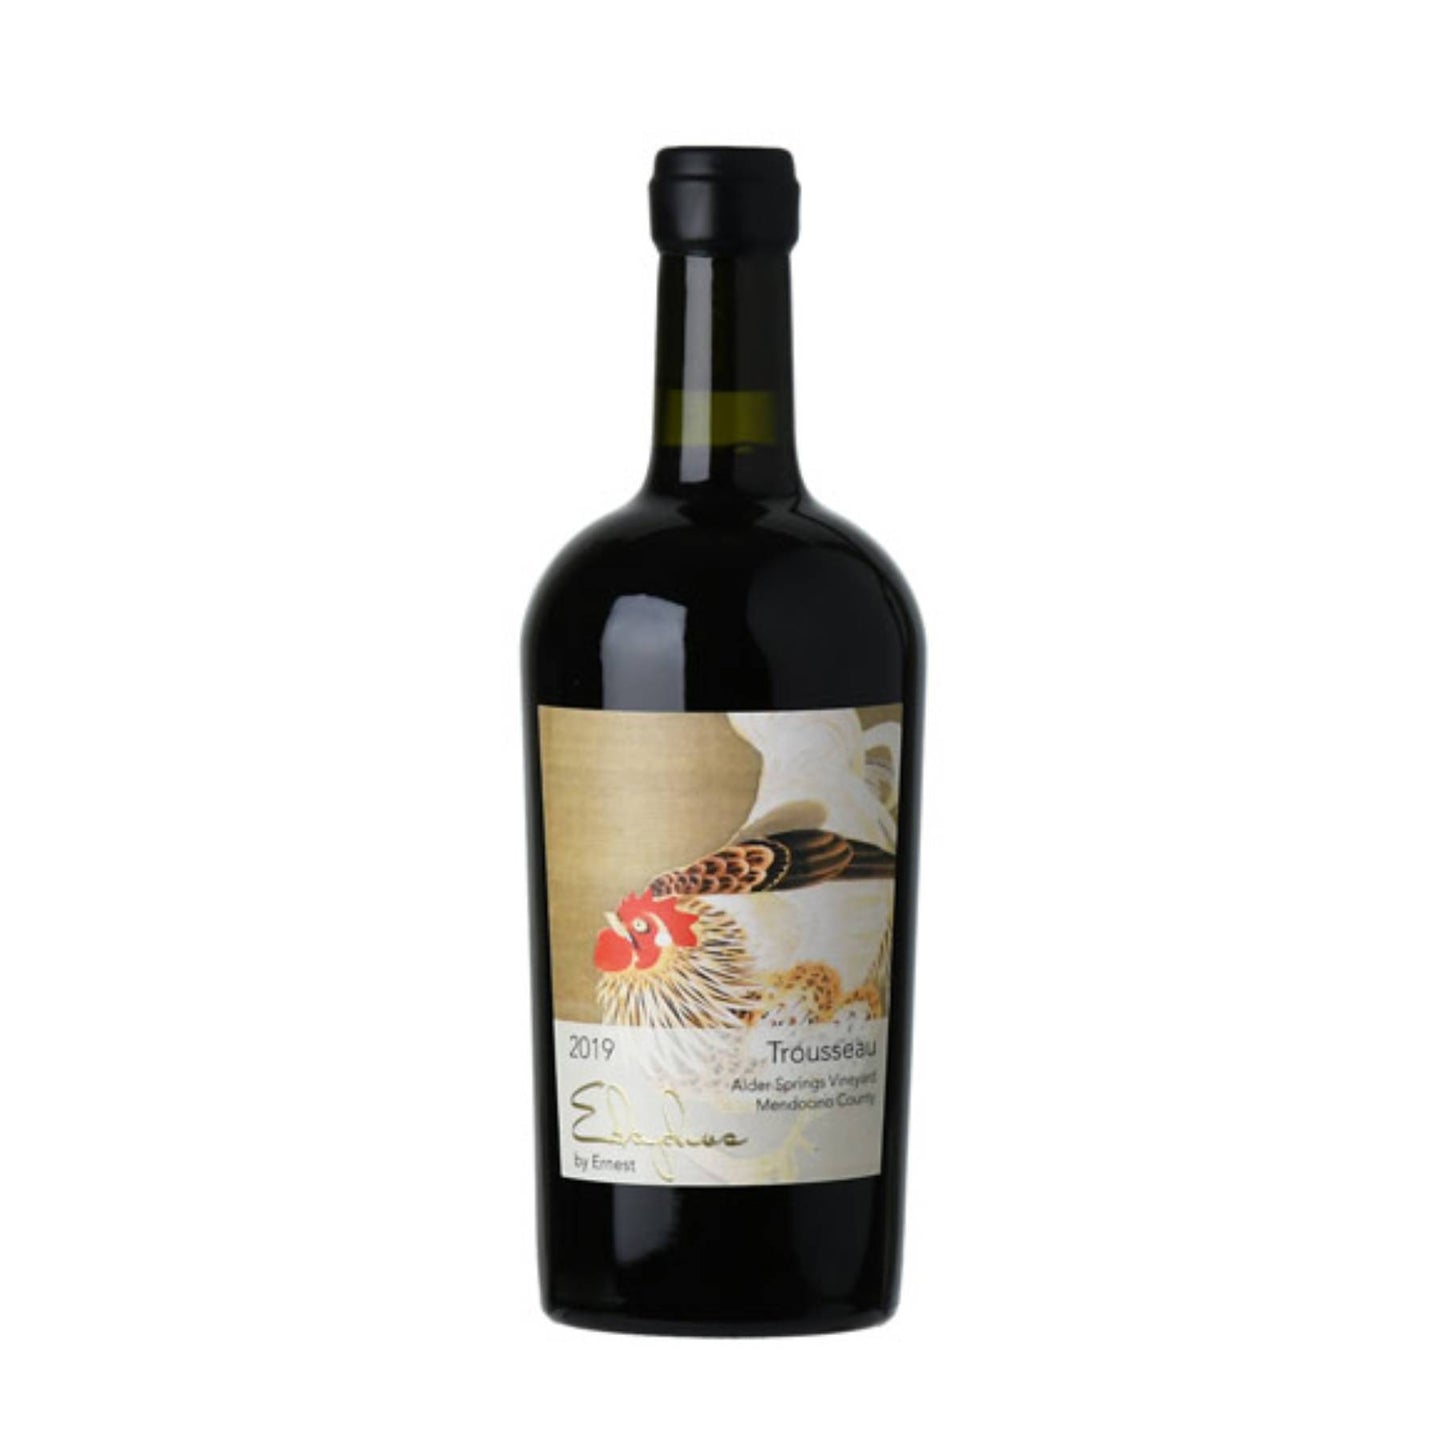 Edaphos Alder Springs Vineyard Trousseau 2019 12%